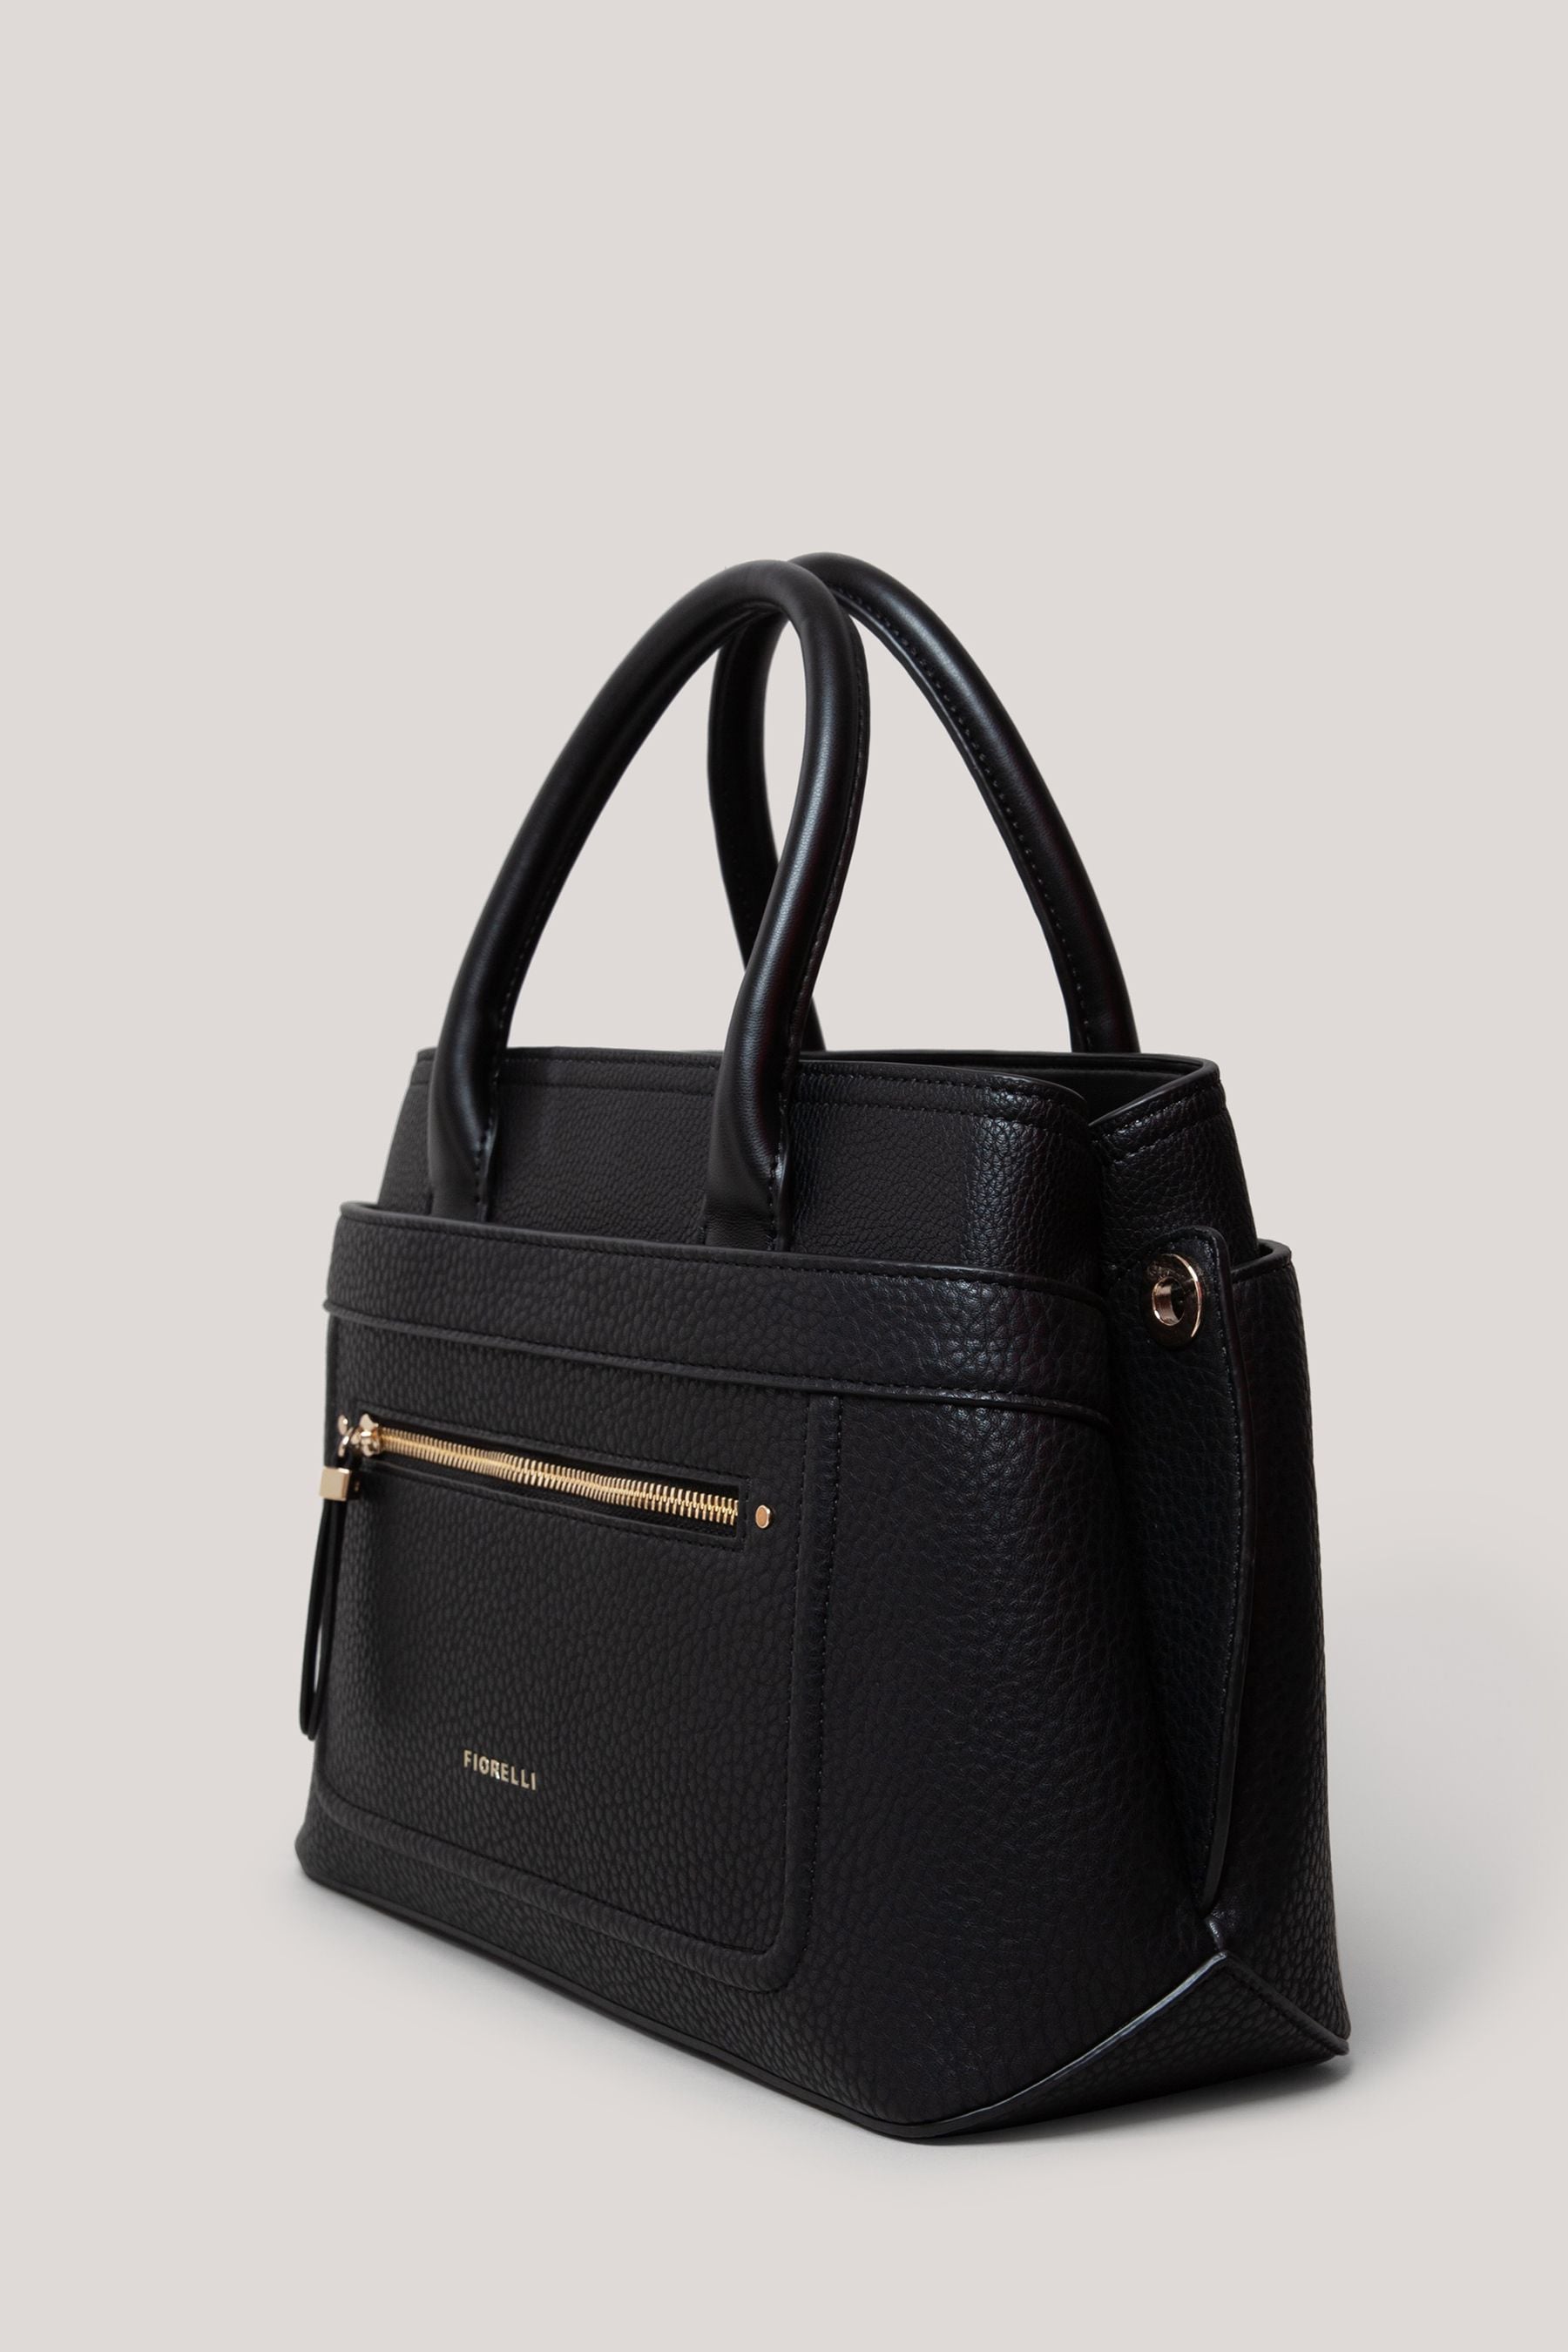 Buy Fiorelli Rami Black Grab Bag from the Next UK online shop